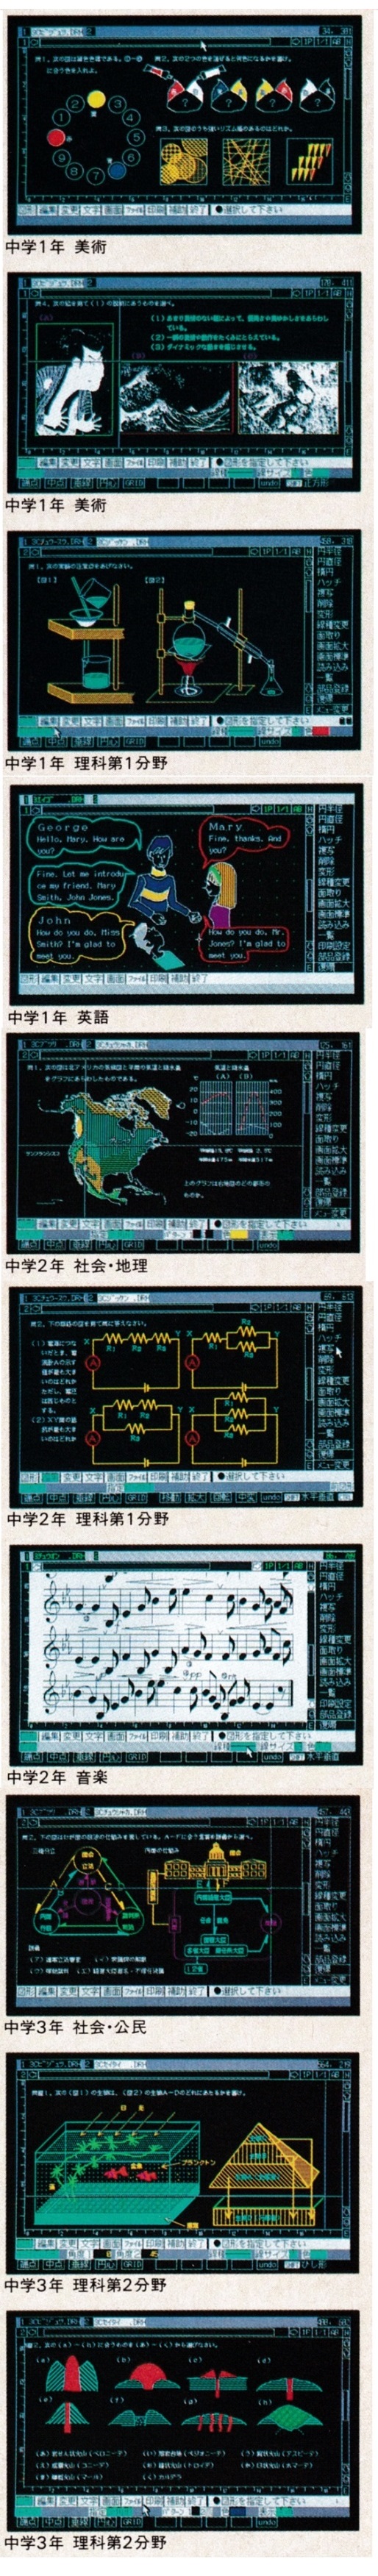 ASCII1987(03)a15花子_教材2_W514.jpg